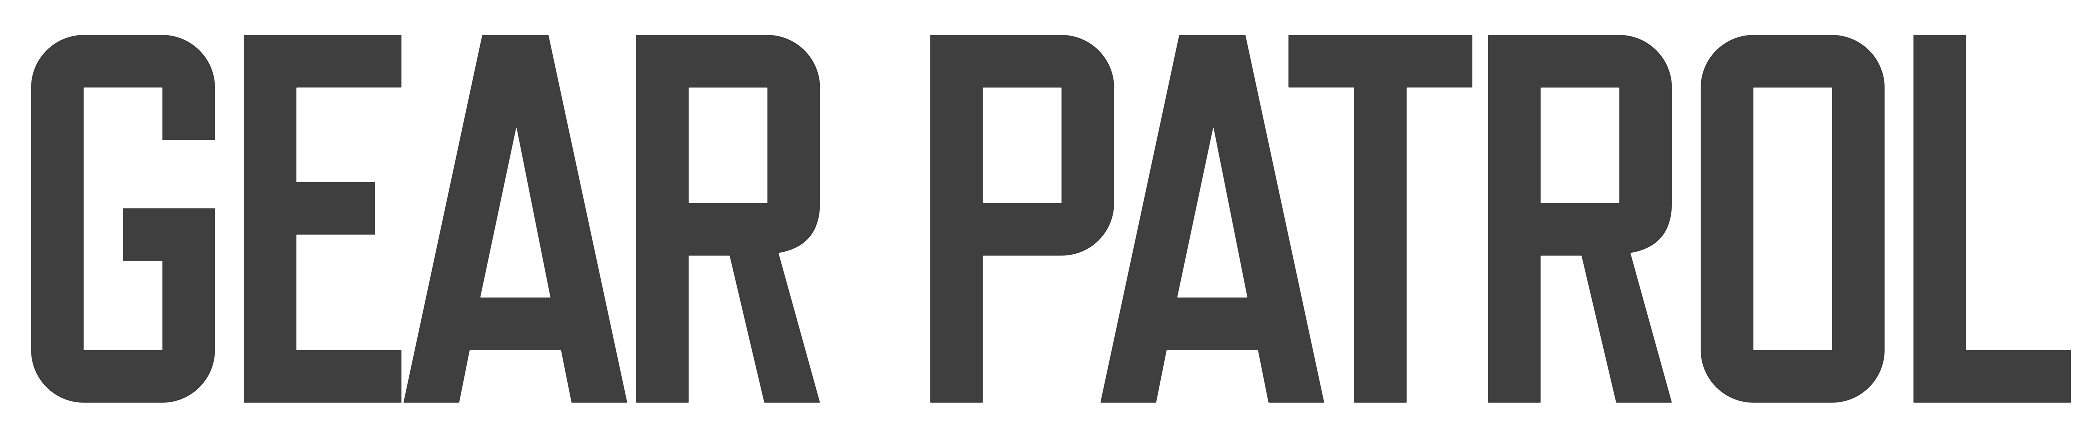 gp-masthead-logo grey.png